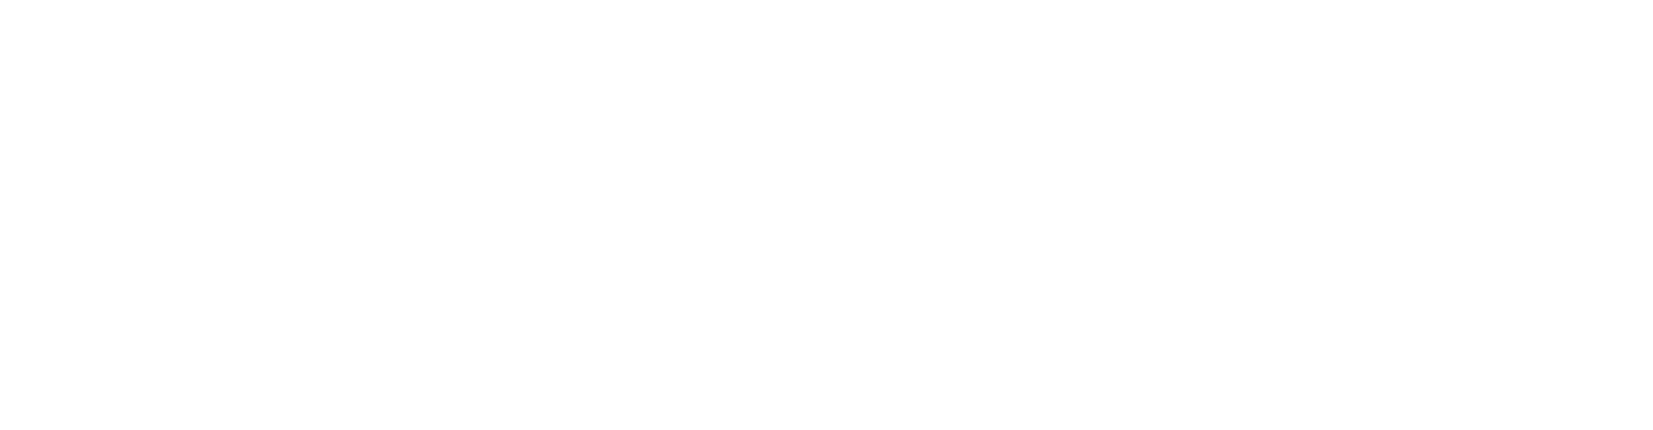 Sevenen Corporation